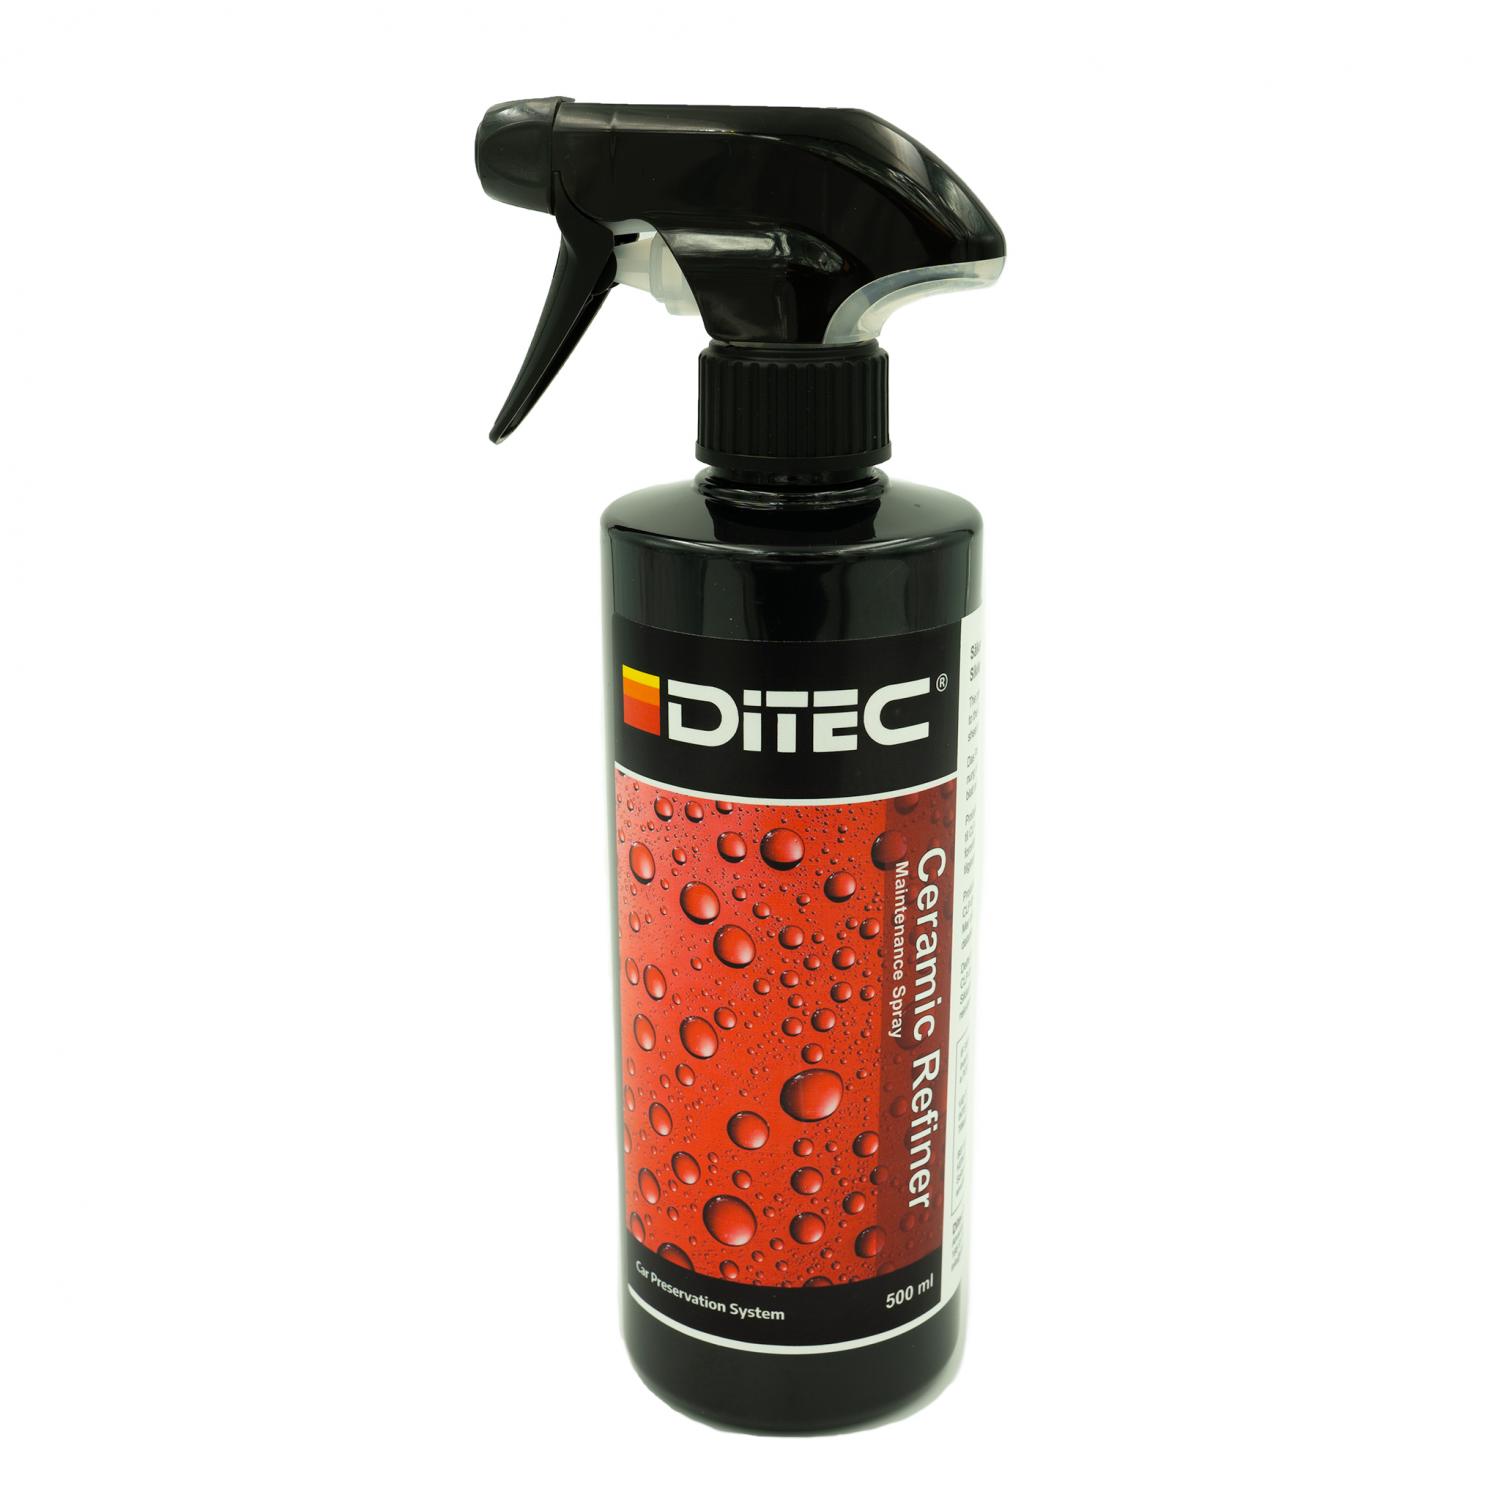 Ditec Refiner, Ceramic maintenance spray, 500 ml.